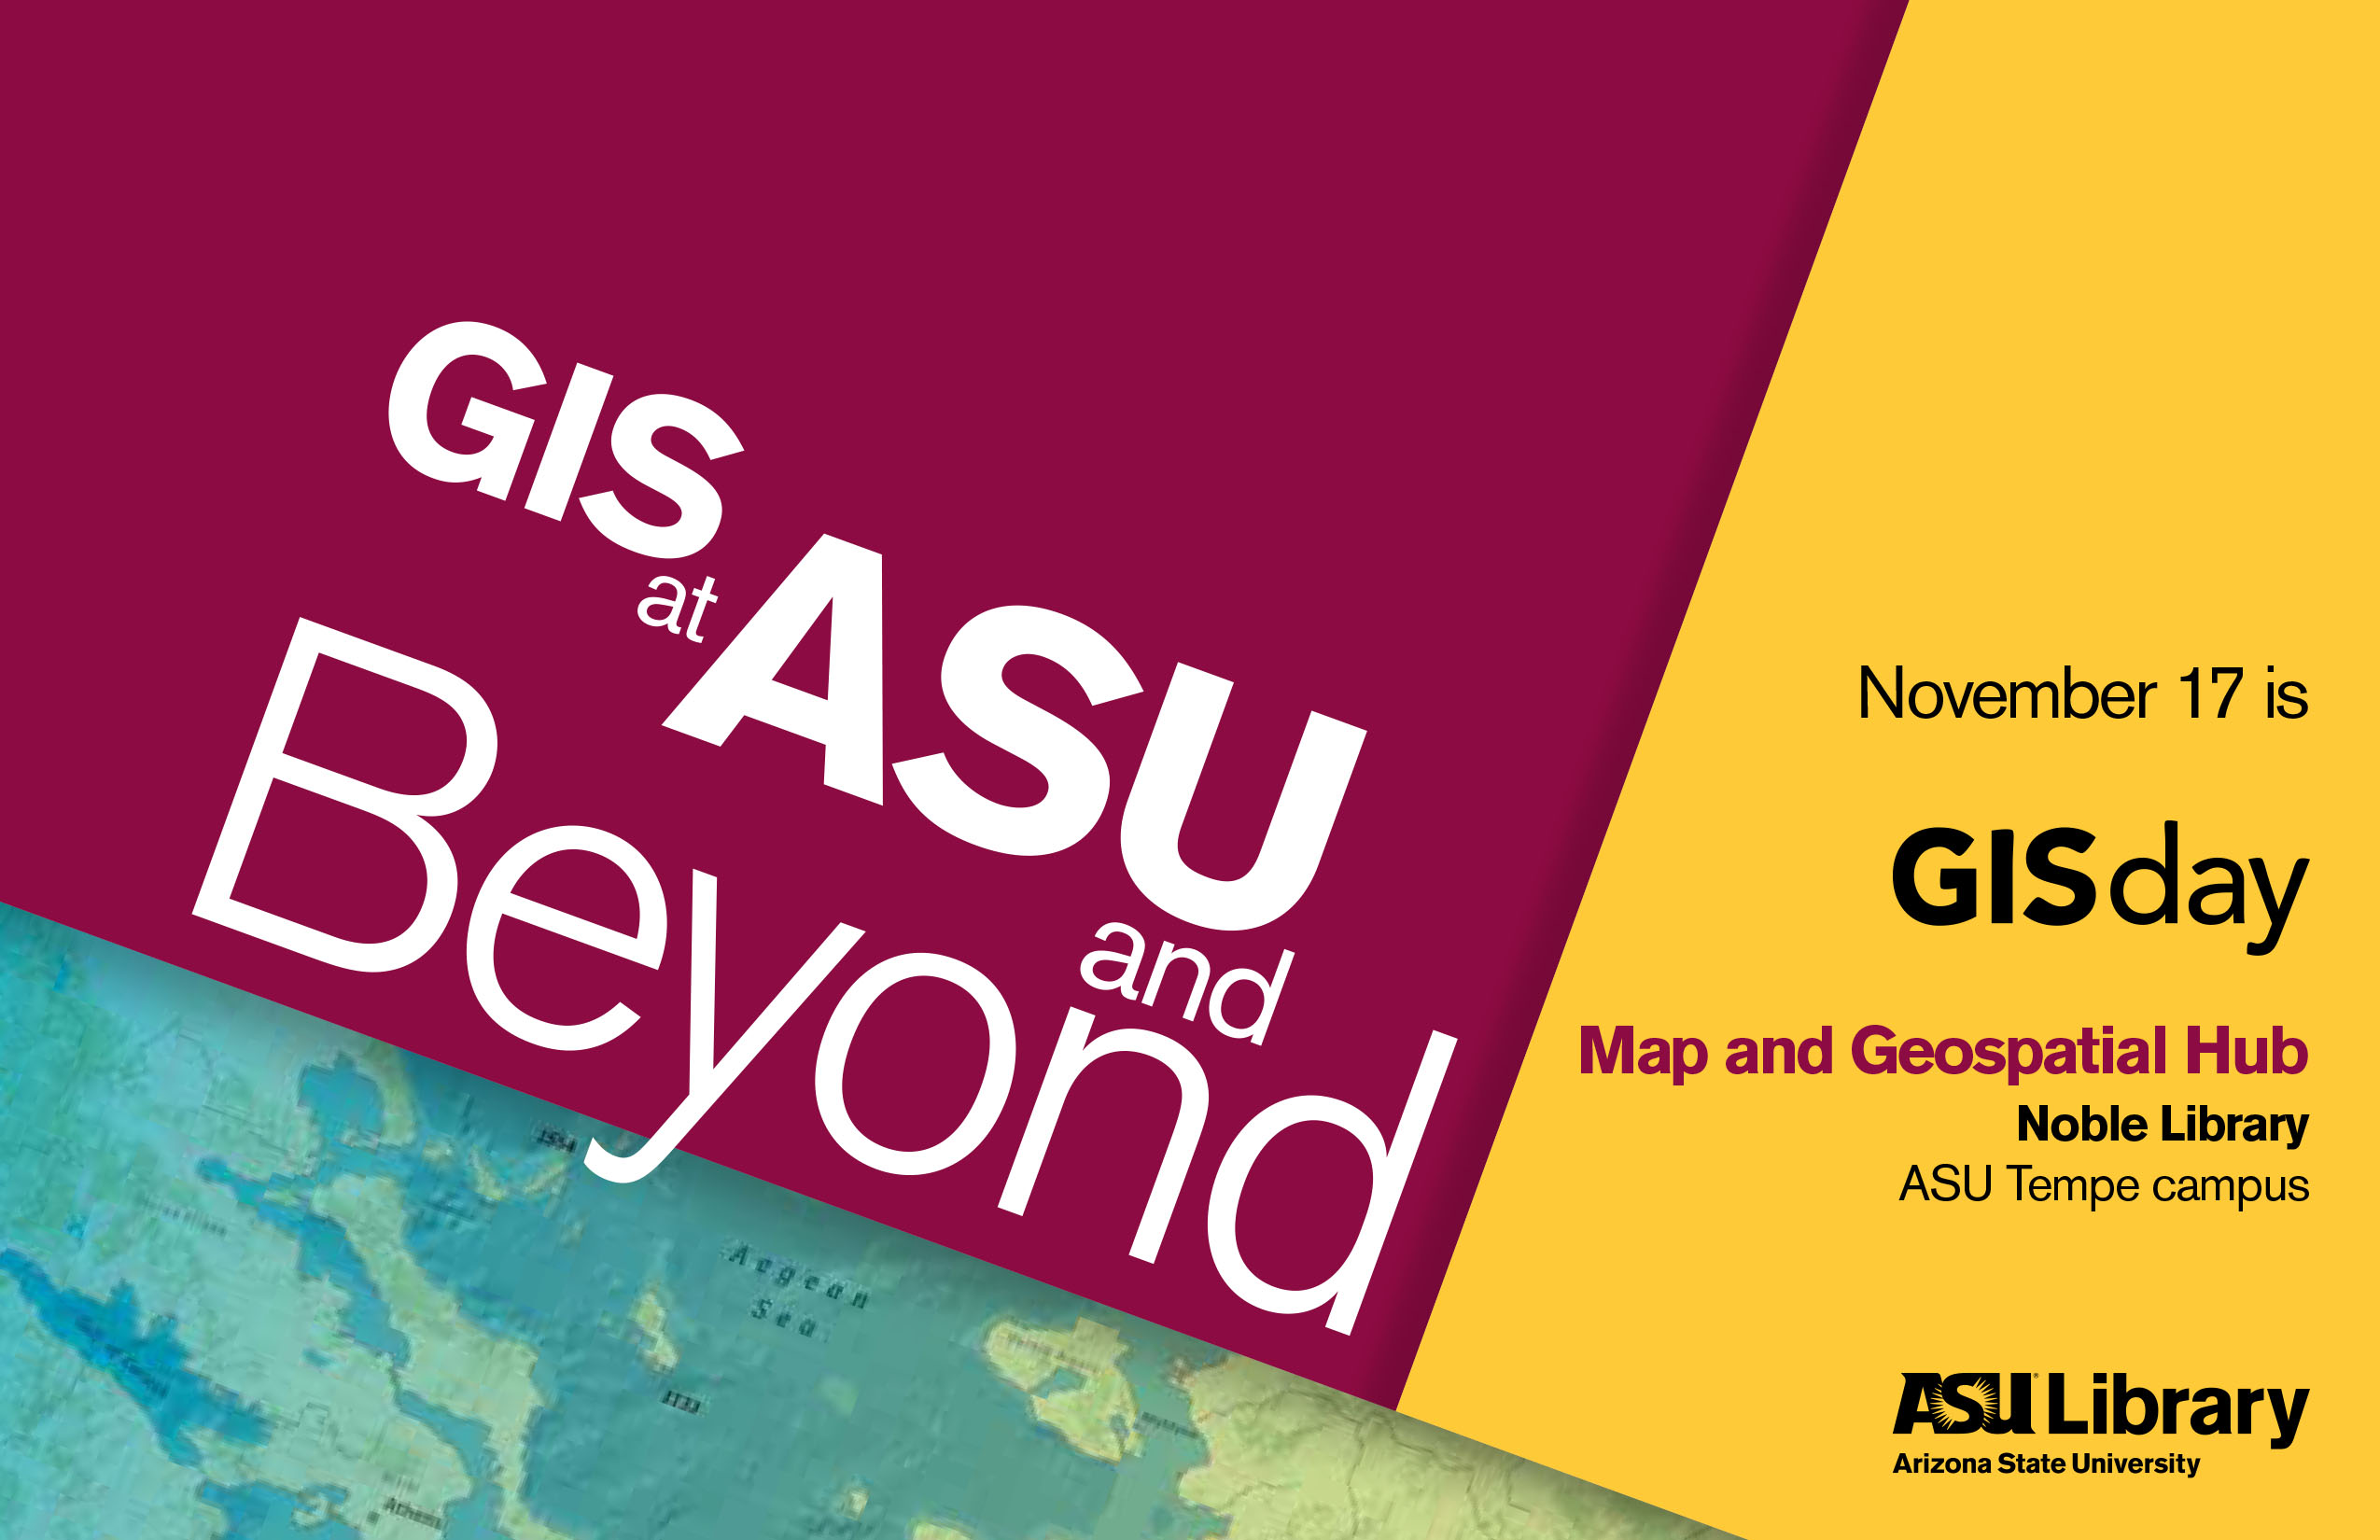 GIS Day Nov. 17 2017, ASU Library Map and Geospatial Hub